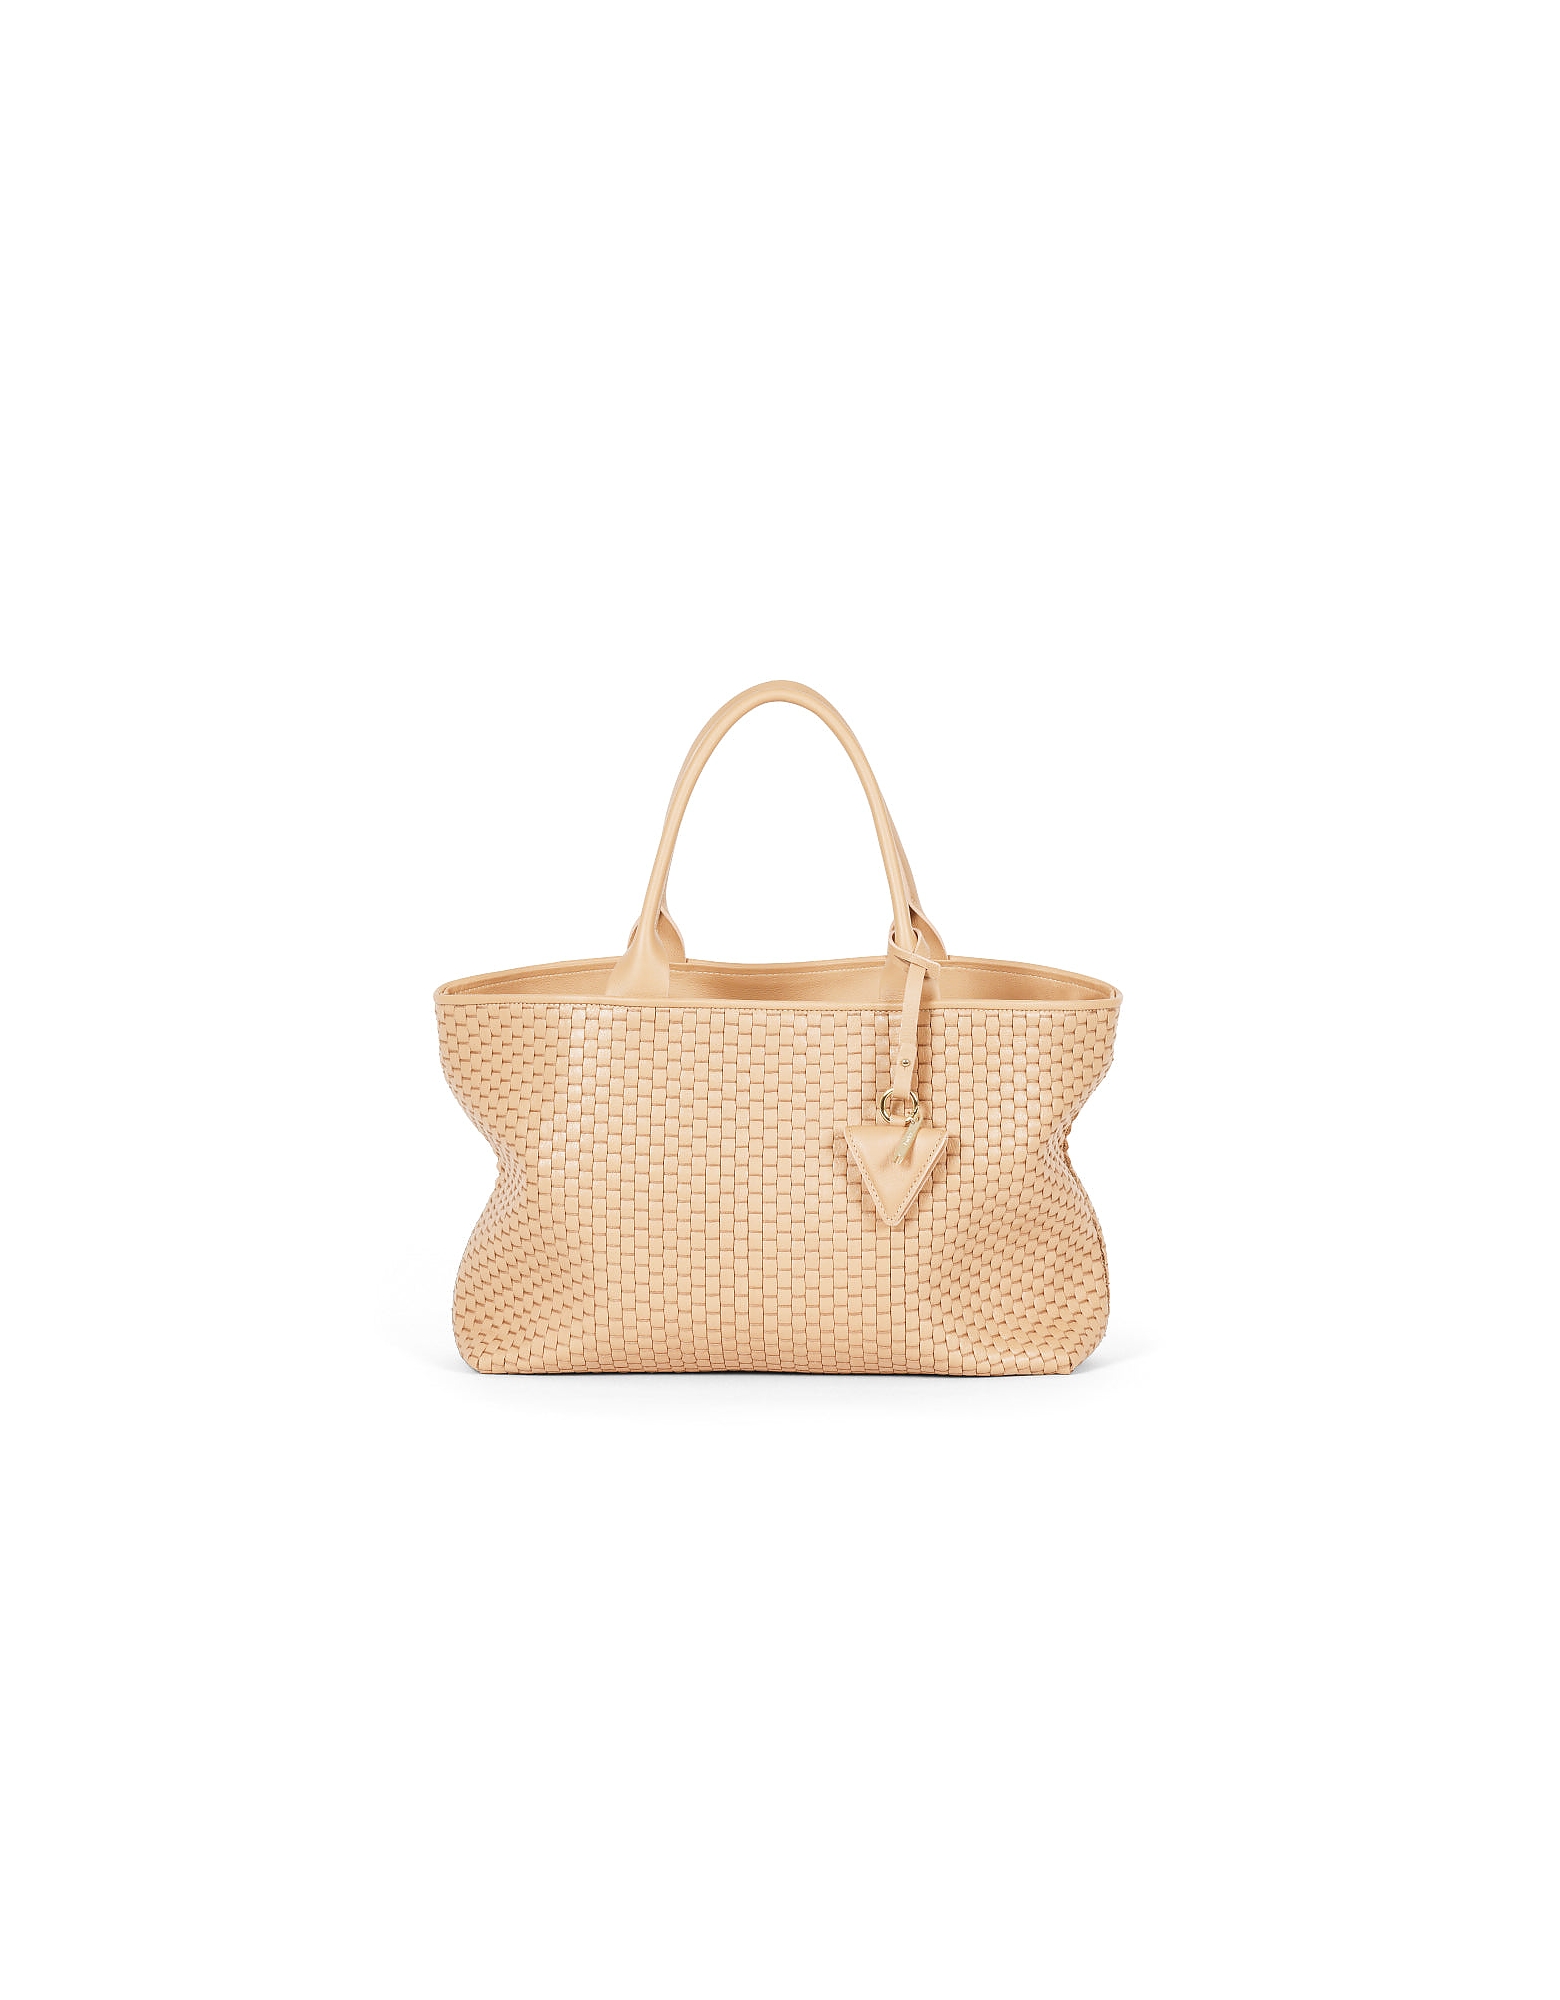 Parise Designer Handbags Shp-60-m - Woven Leather Tote Bag In Marron